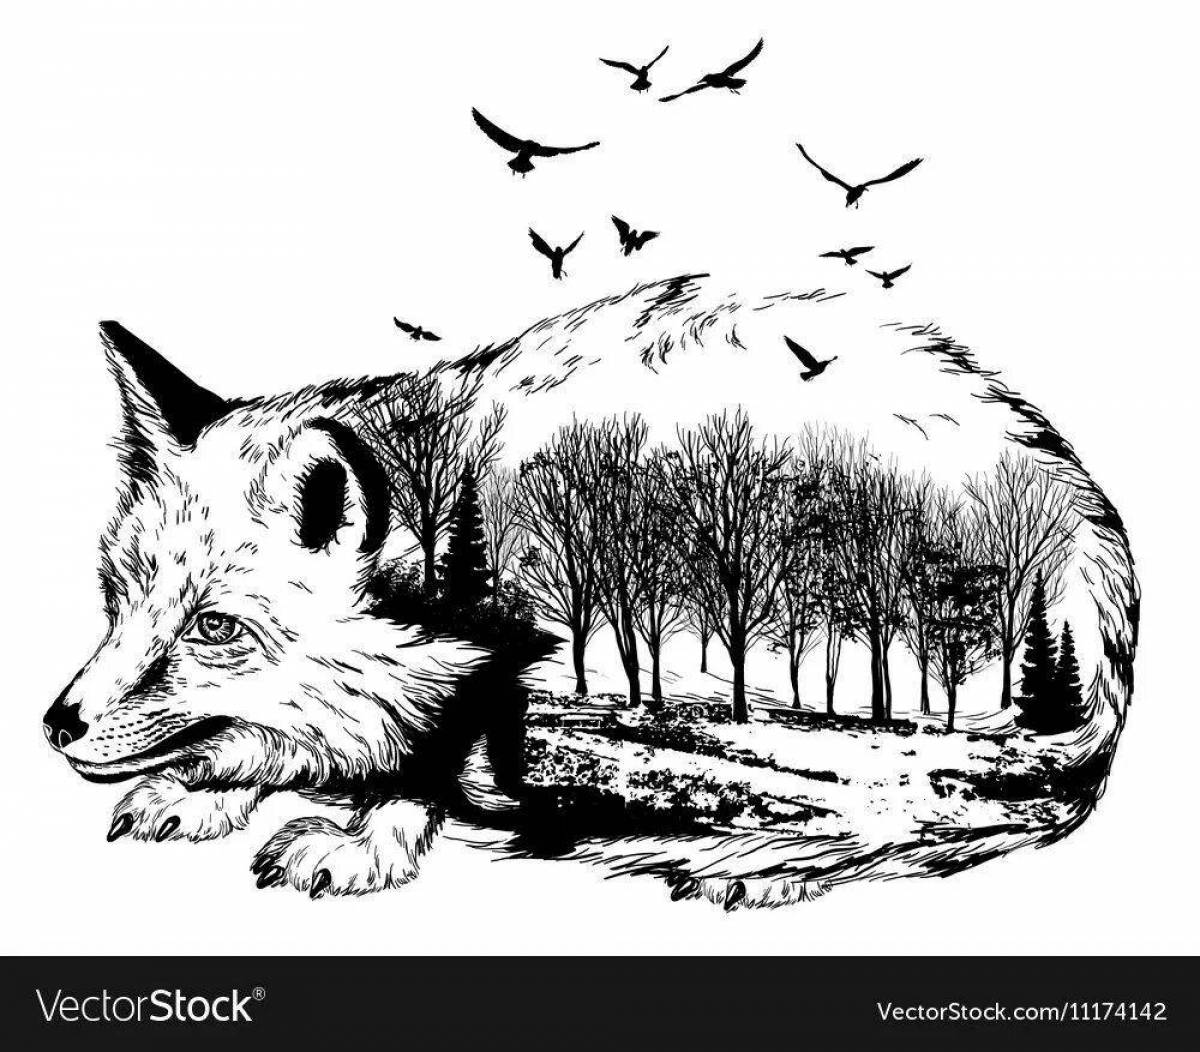 A busy fox in a hole